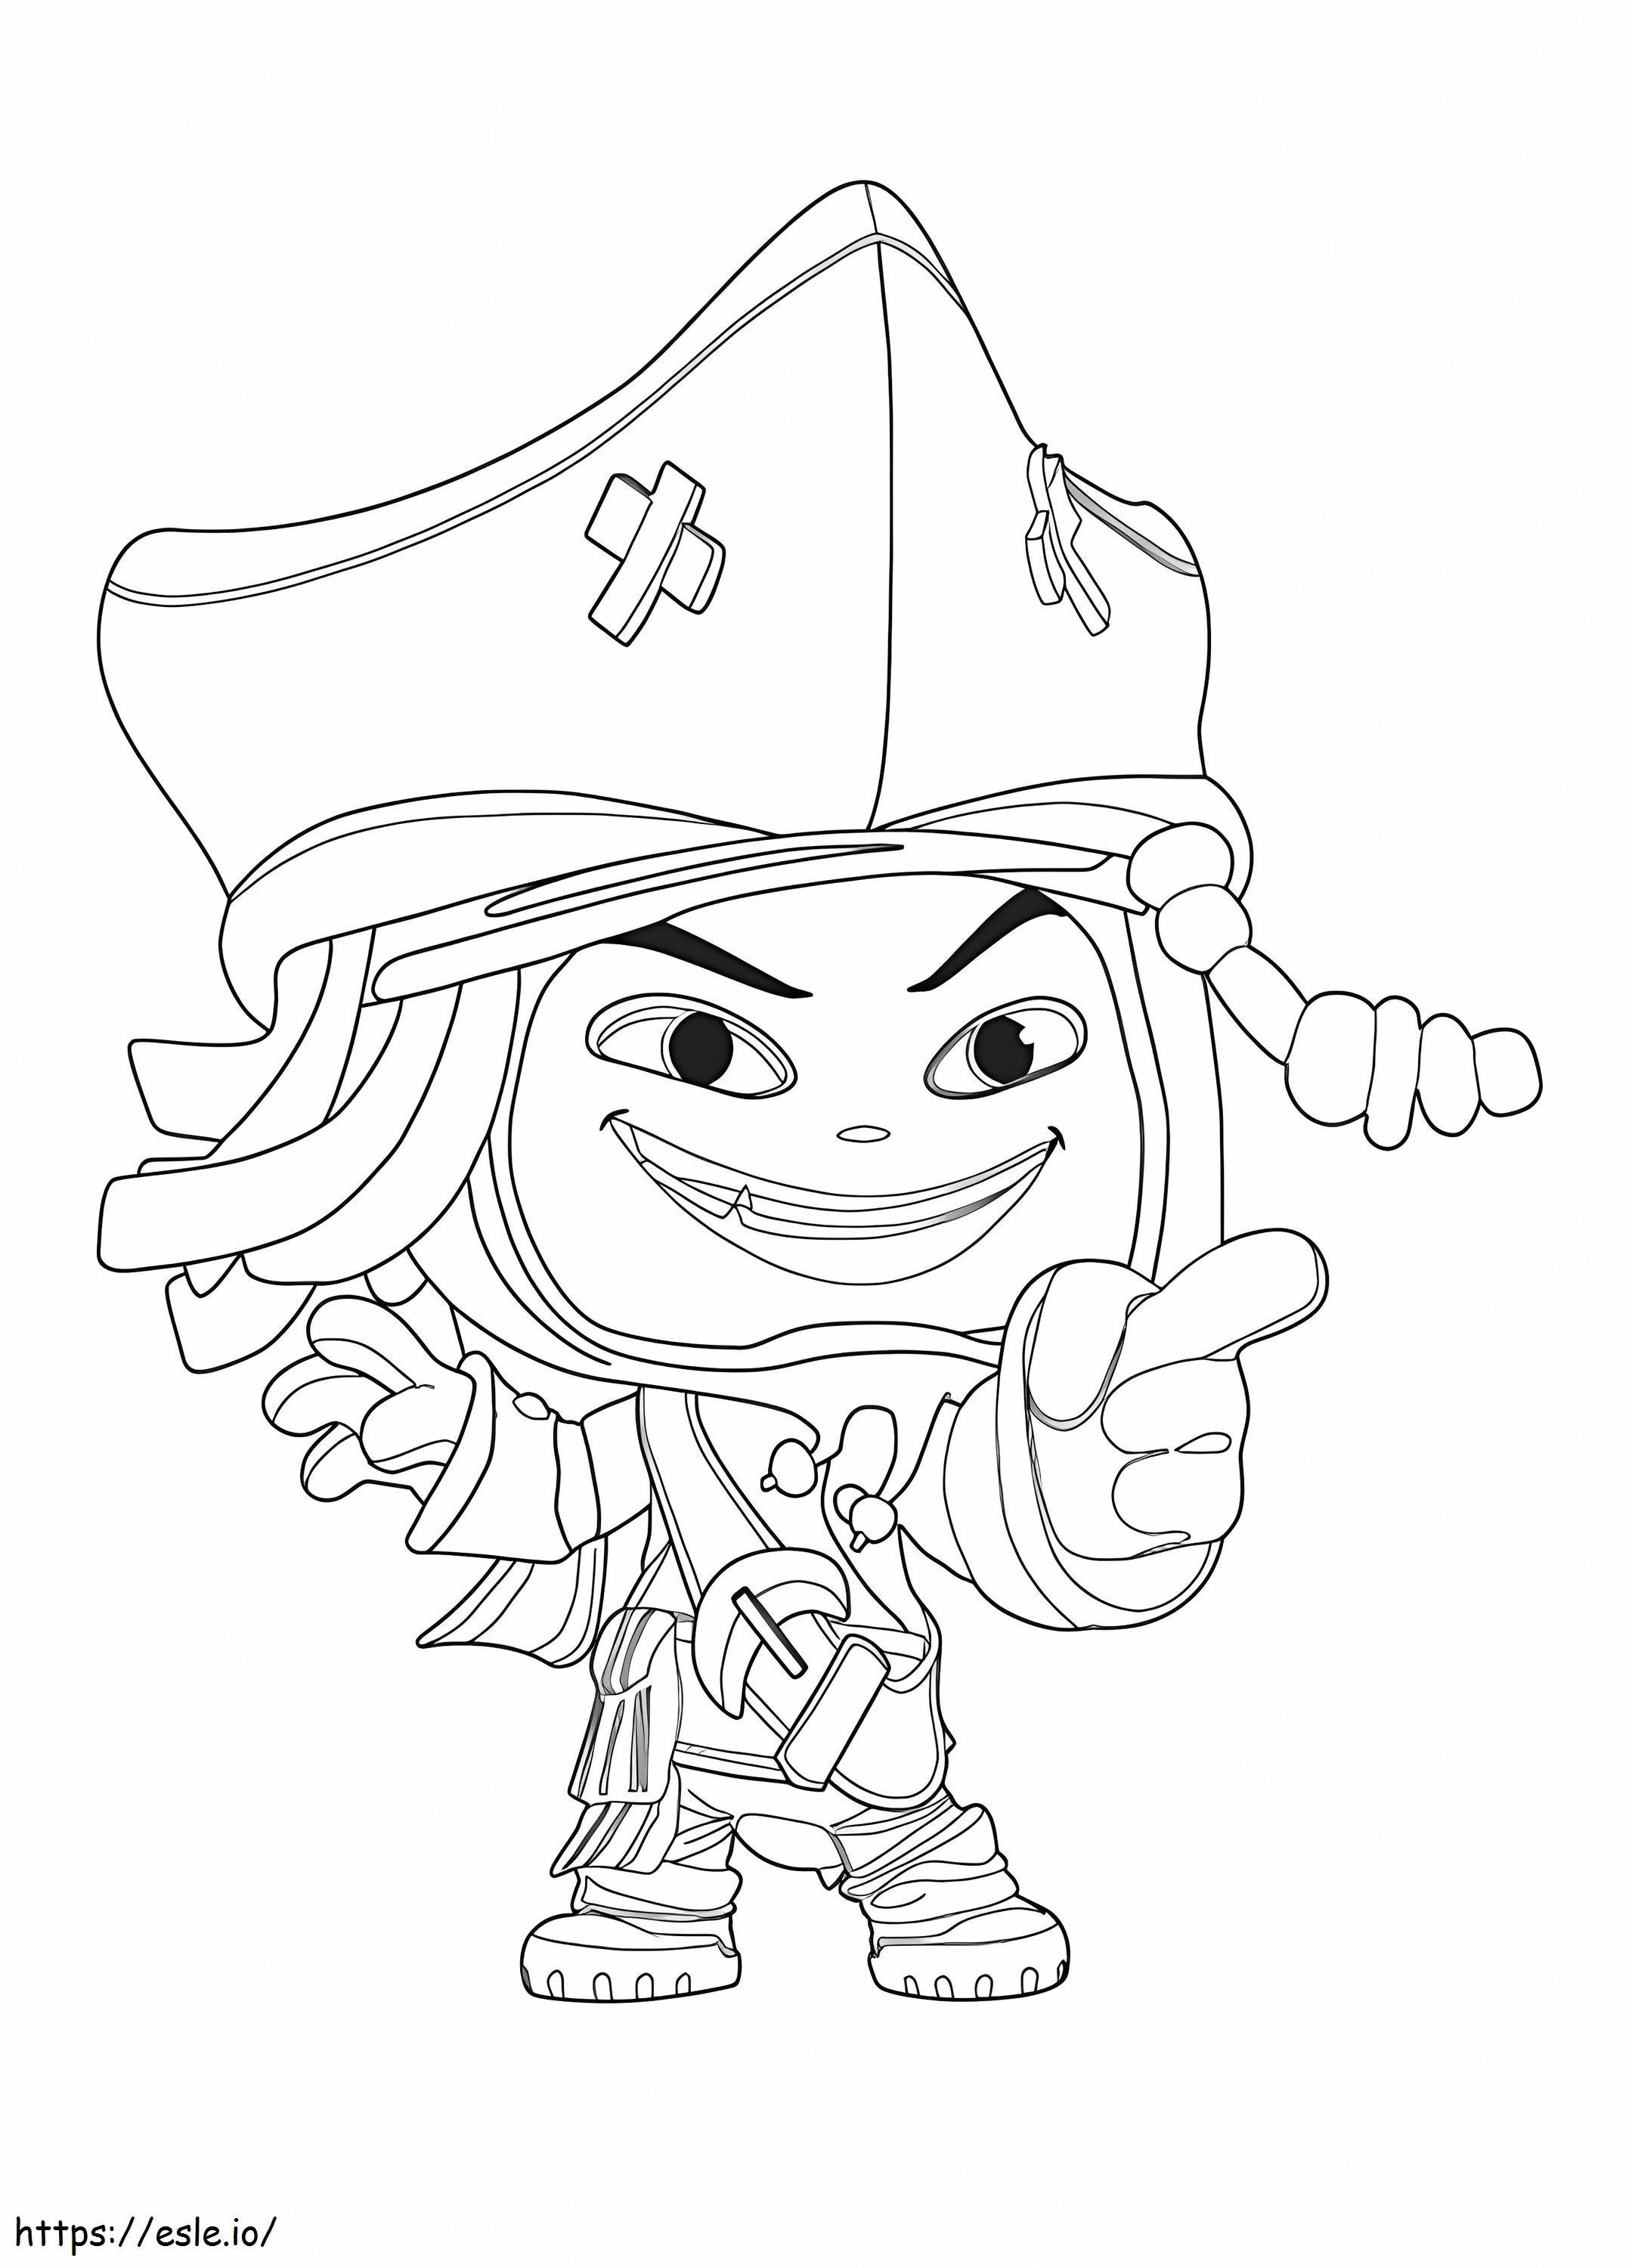 Jack Sparrow uit Disney Universe kleurplaat kleurplaat